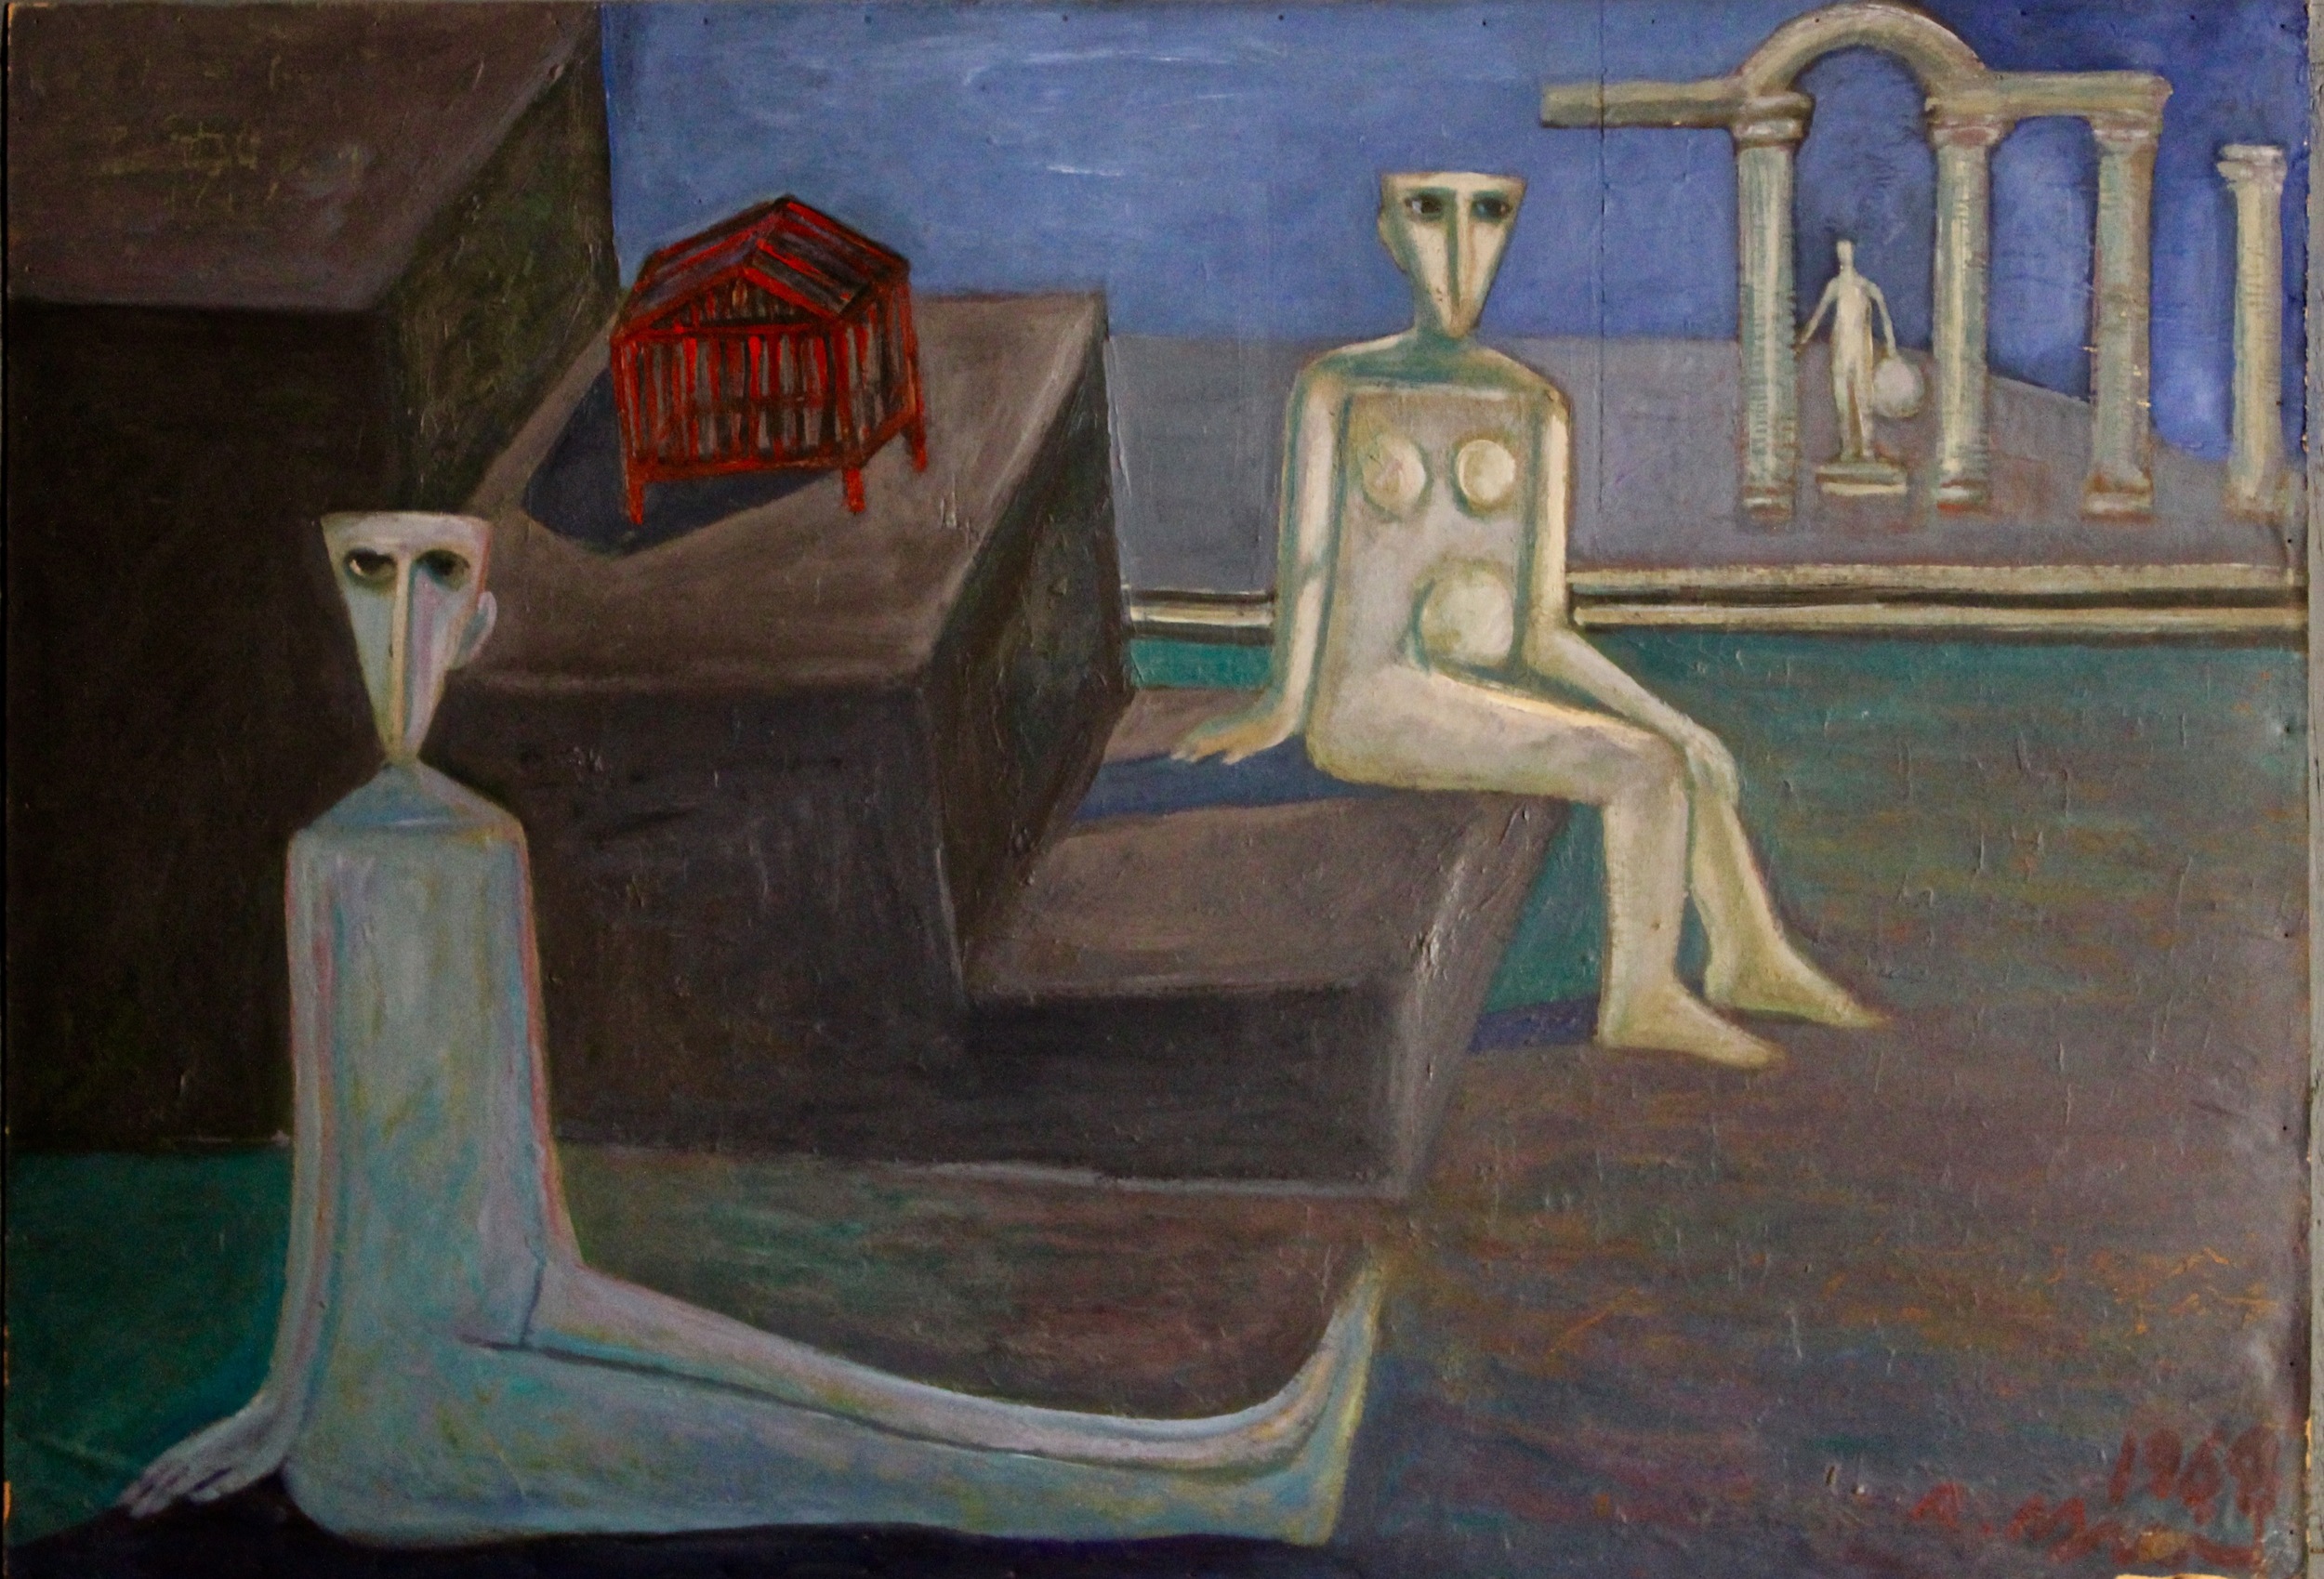  Ahmed Morsi, Red Cage,&nbsp;1968,&nbsp;Oil on wood,&nbsp;70 x 100 cm.    